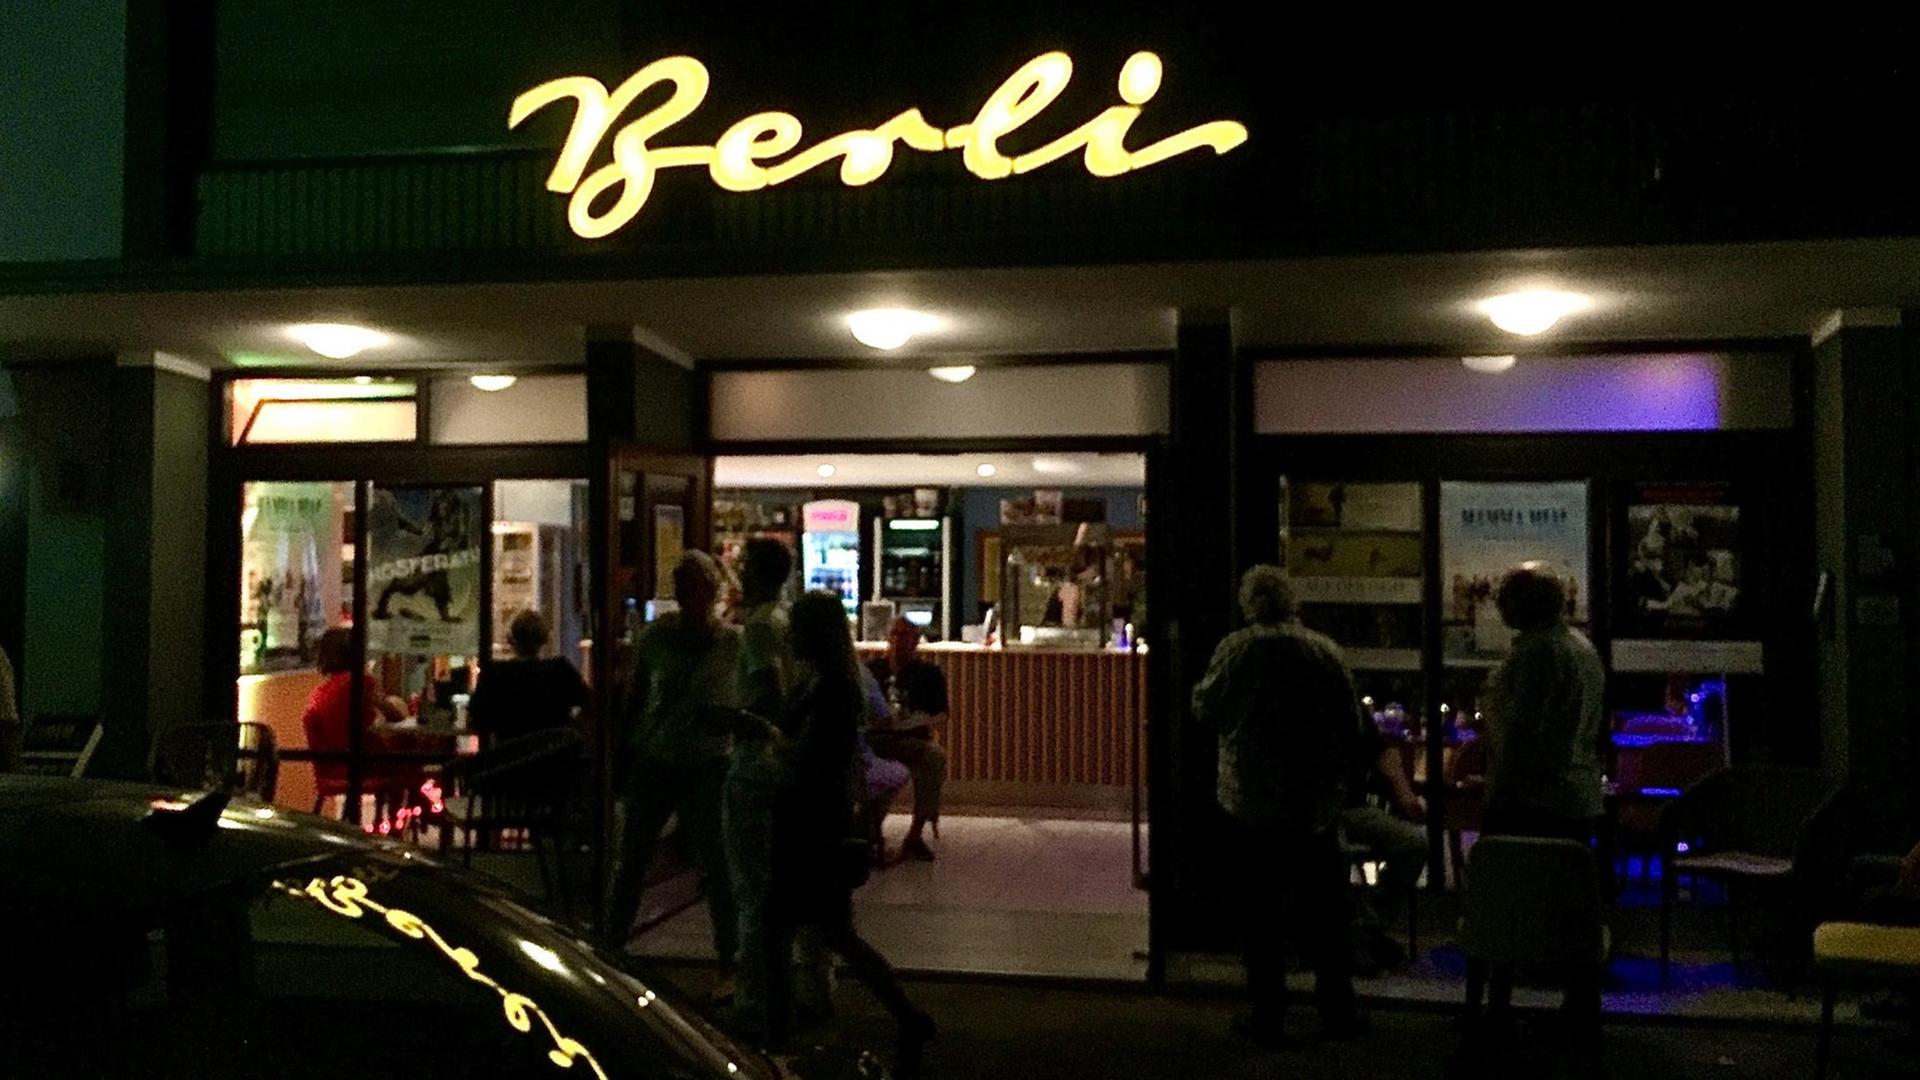 Kino bei Nacht: Das "Berli Theater" in Hürth bei Köln